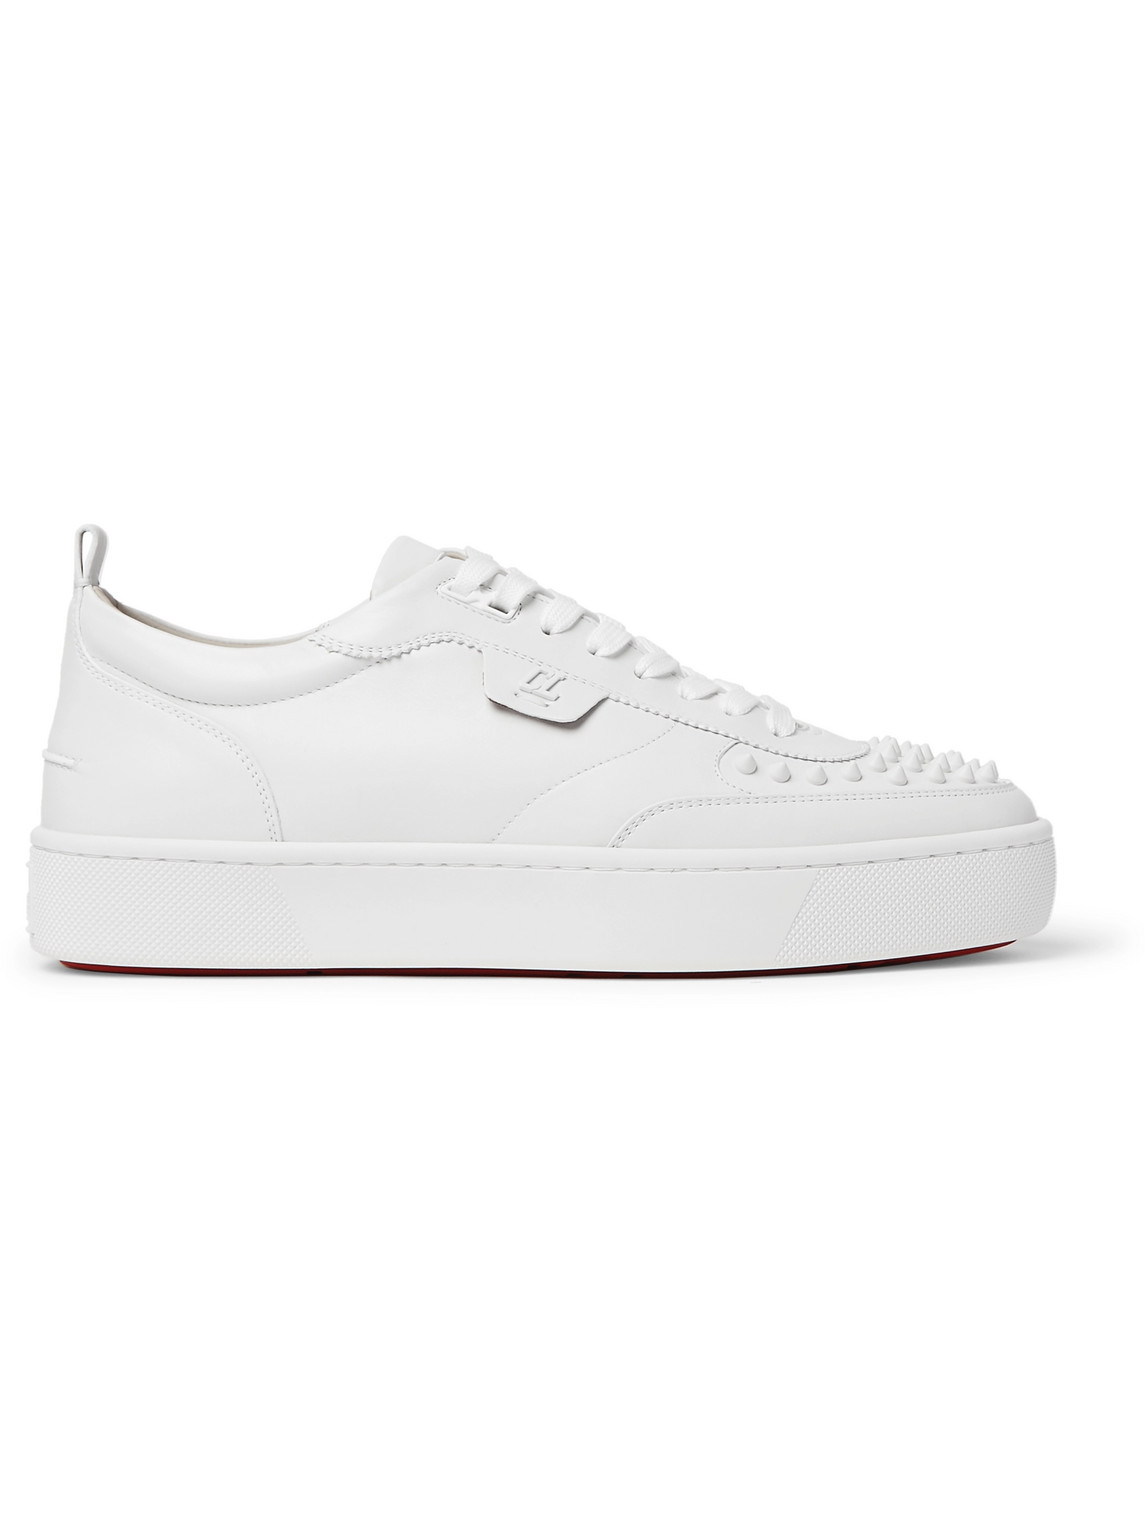 Christian Louboutin Happyrui Spike Sneakers In White